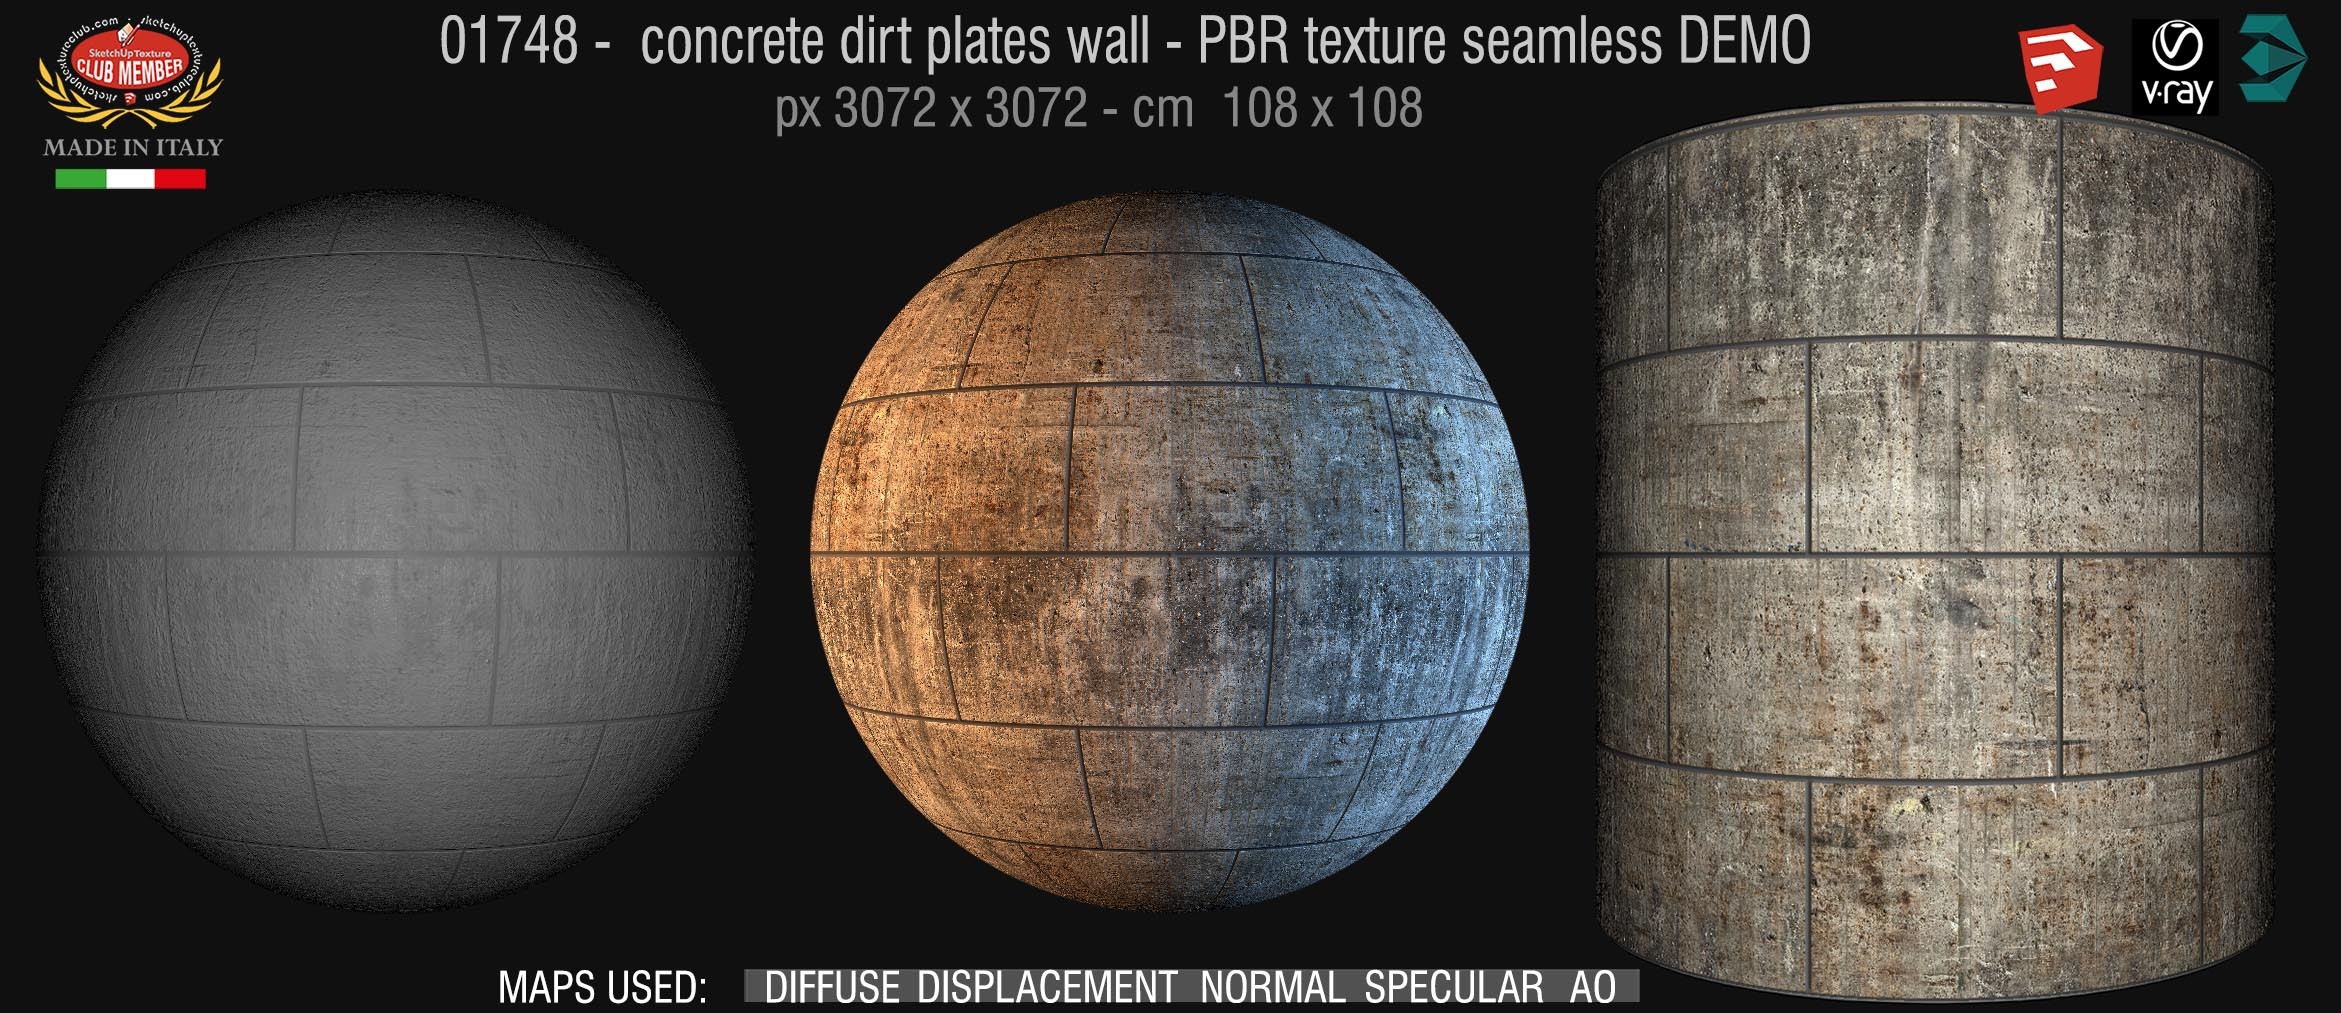 01748 concrete dirt plates wall PBR texture seamless DEMO